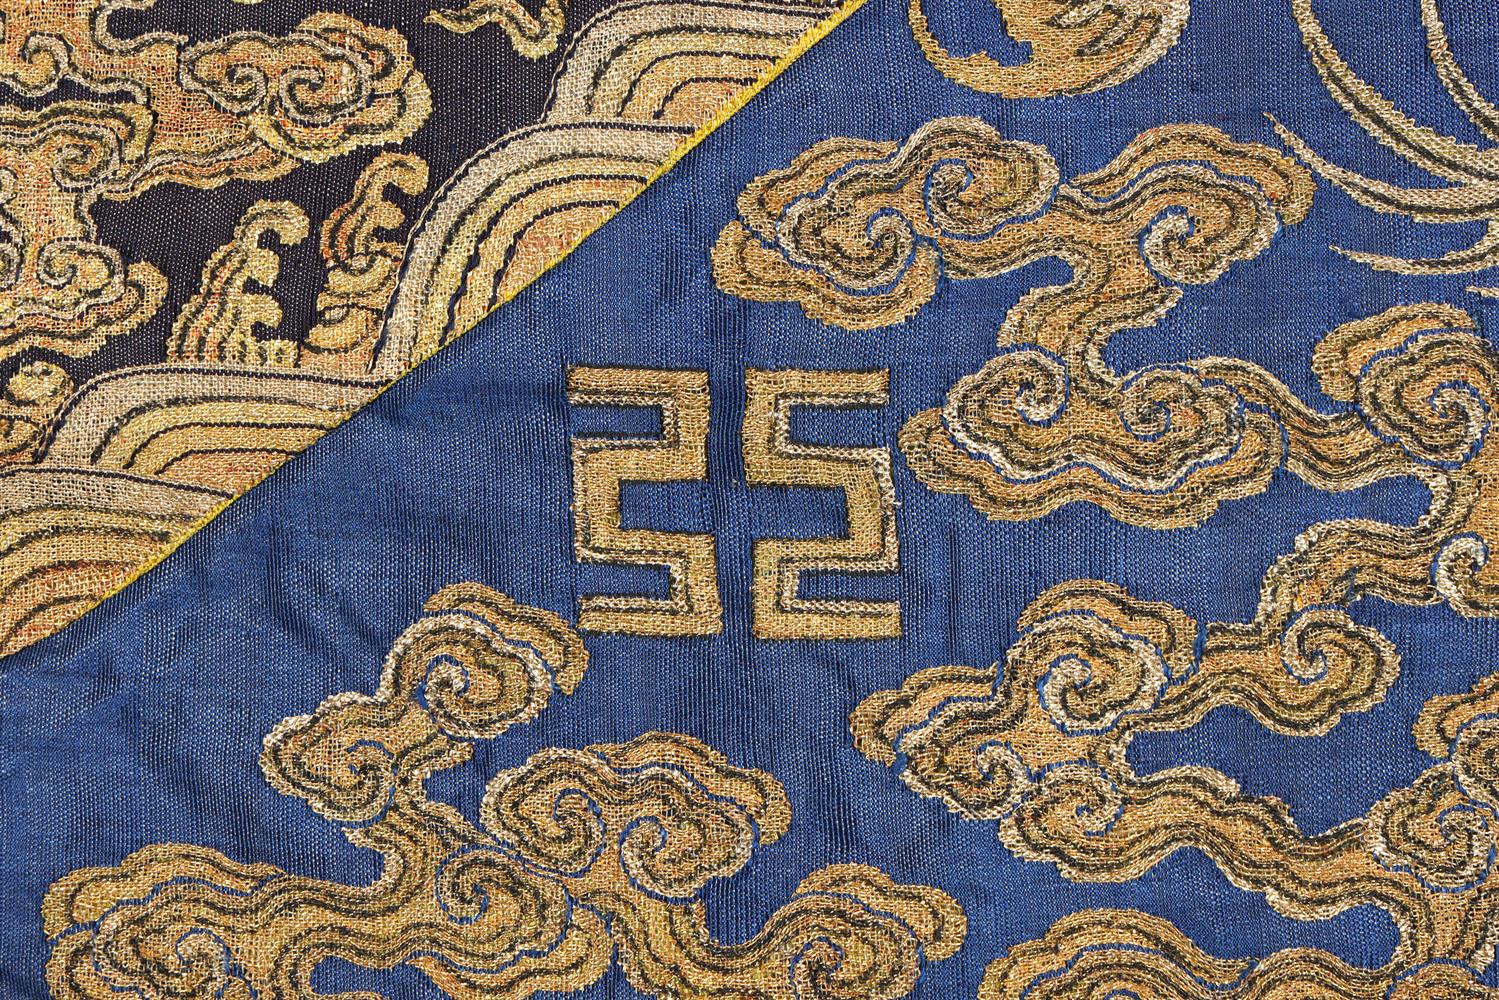 A rare Imperial 'twelve symbol' blue silk dragon robe - Image 11 of 37